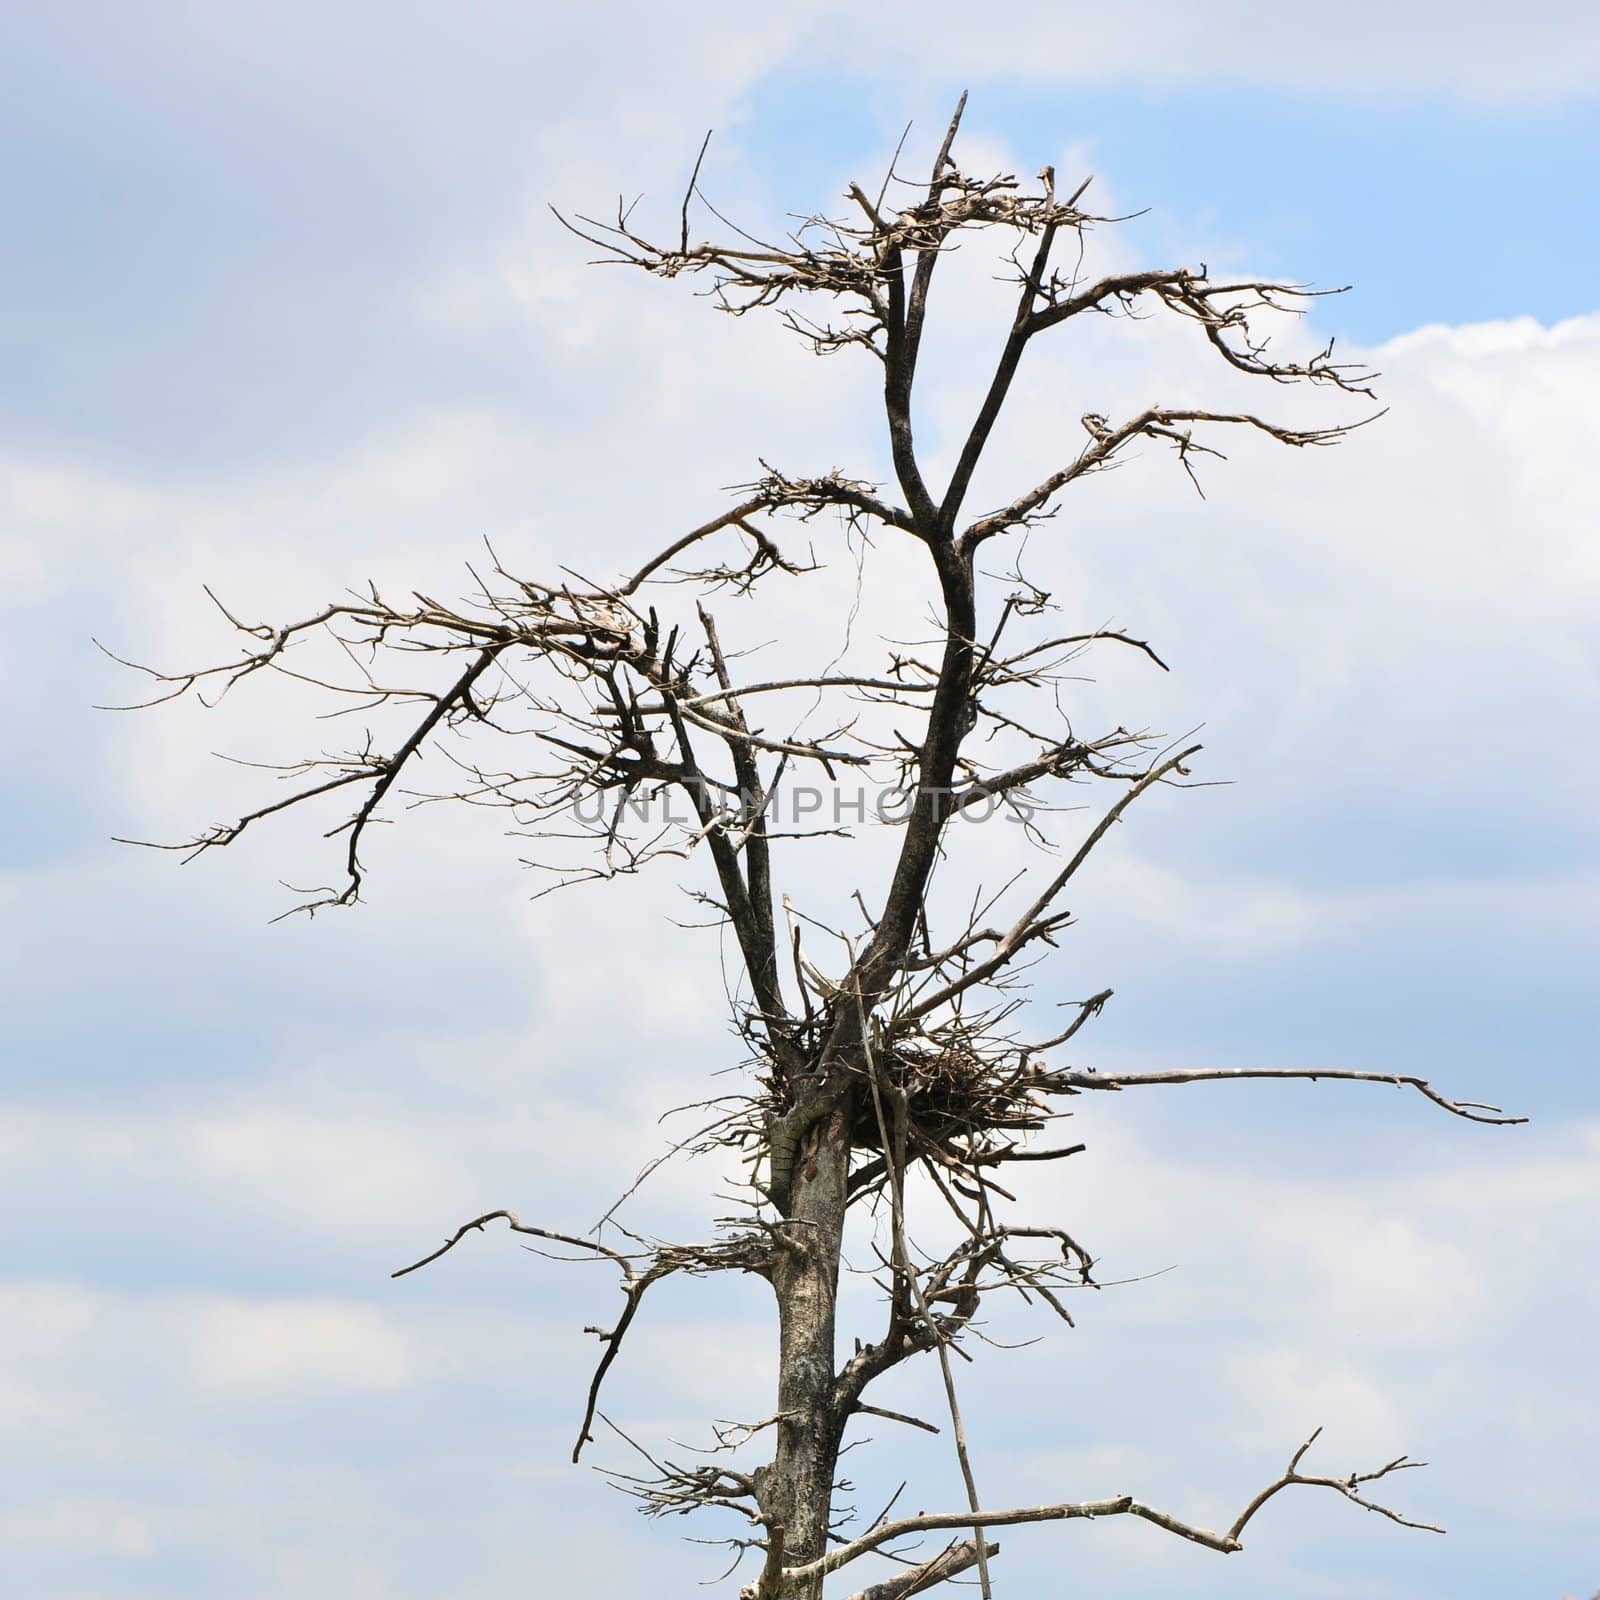 nest on dried tree by antpkr